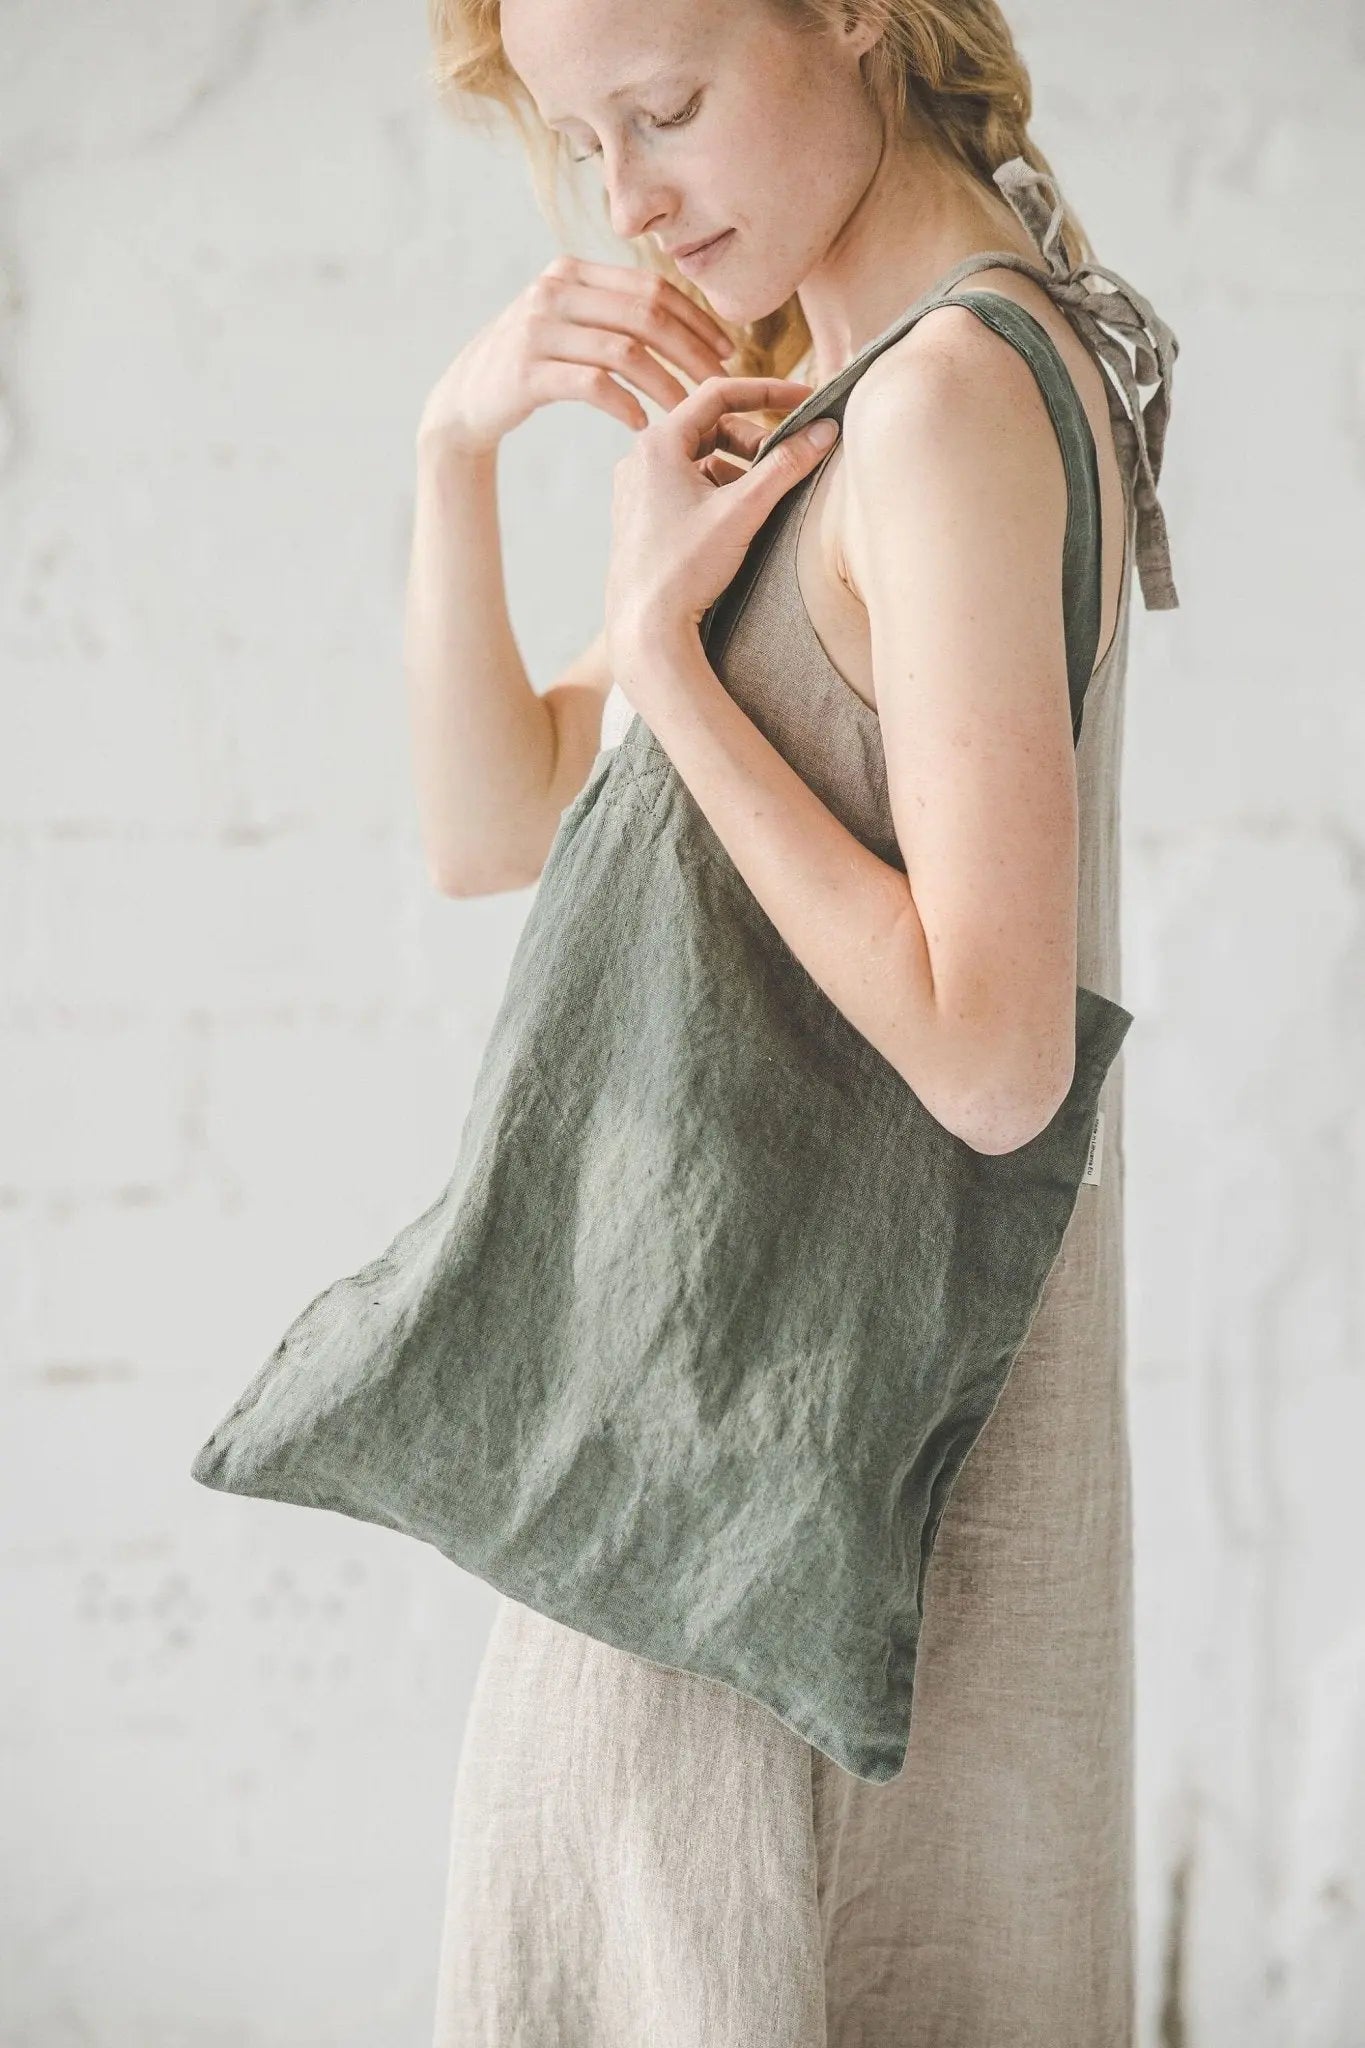 Linen Tote Bag - Epic Linen luxury linen